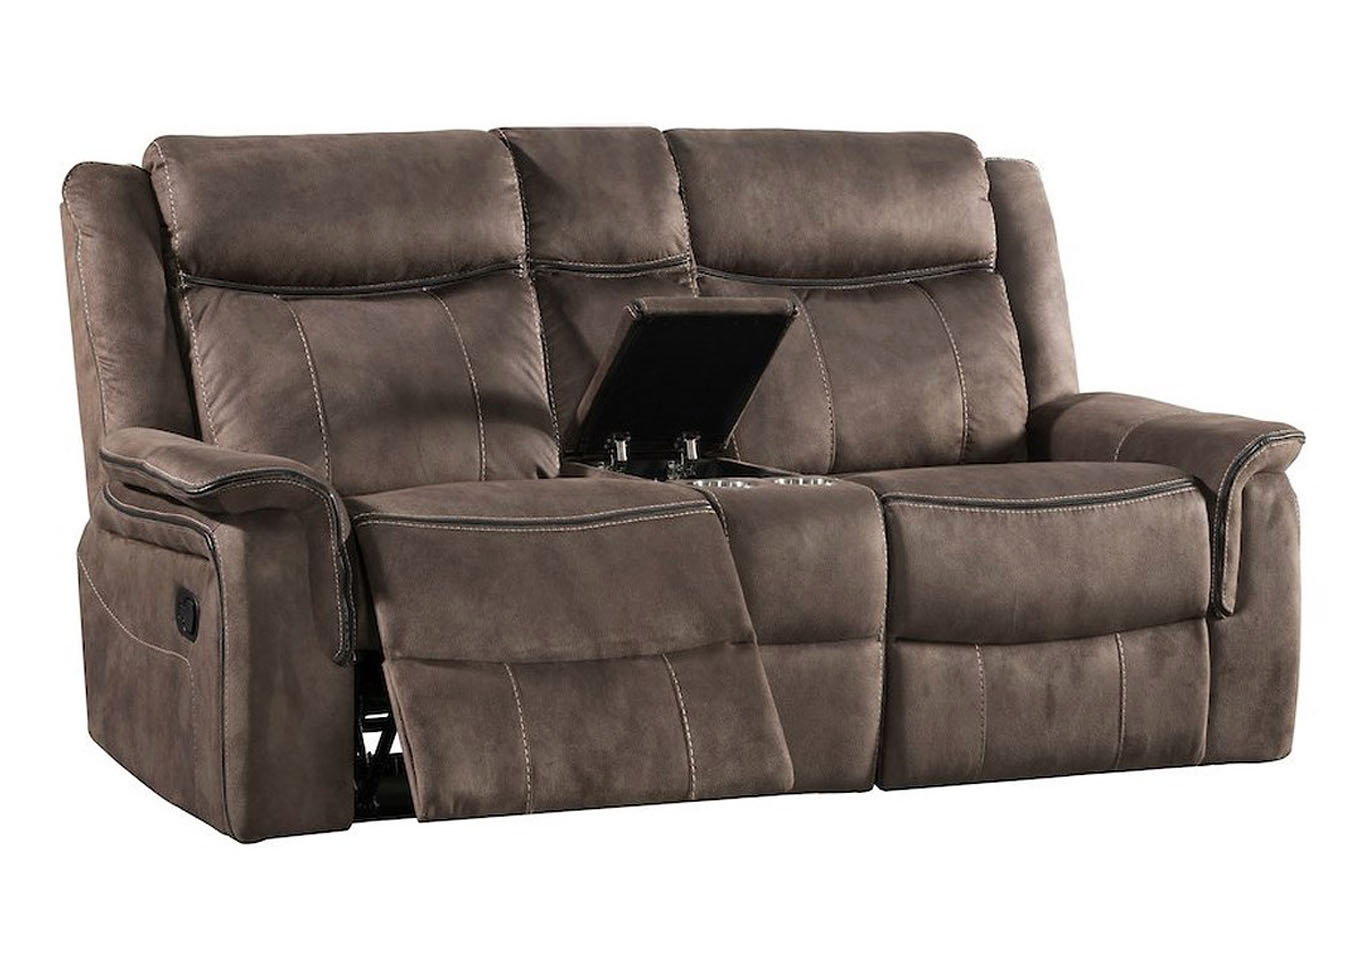 Kisner Dual Reclining Sofa and Dual Reclining Love Seat - Brown,Instore